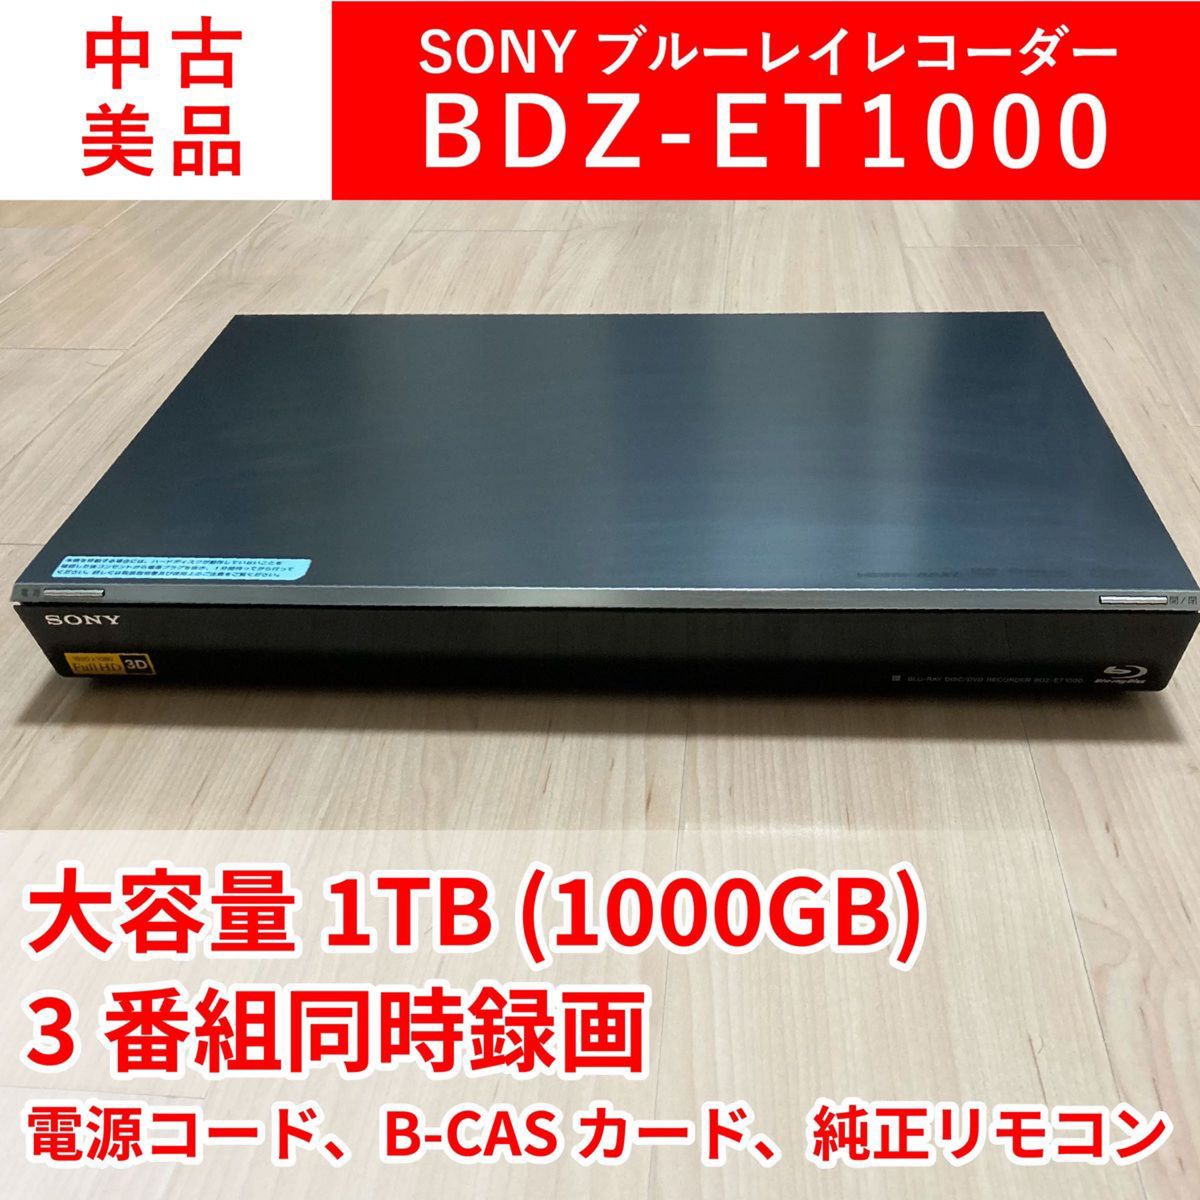 SONY ブルーレイレコーダー BDZ-ET1000 HDD 2TB換装品 - ブルーレイ